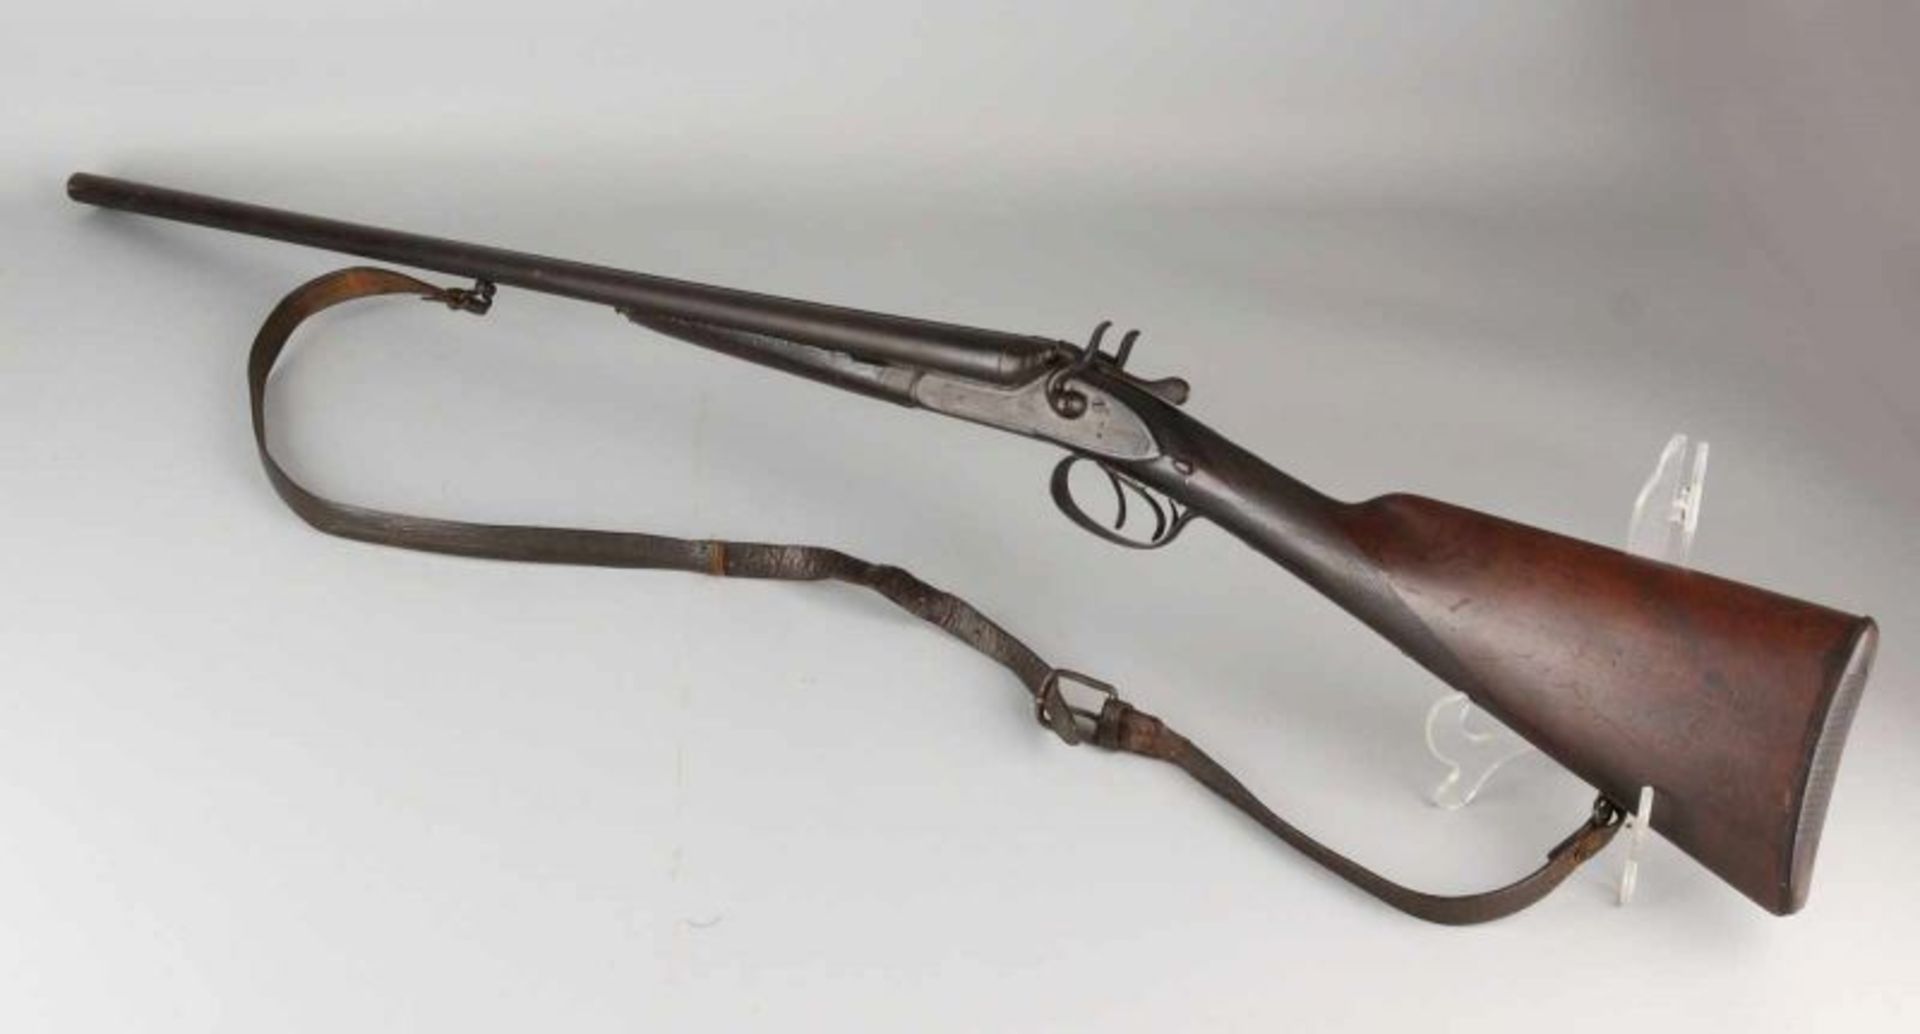 Antique double-barreled shotgun. Signed Eprouyl Poudre pyroxylee. Dimensions: L 111 cm. In good - Bild 2 aus 4